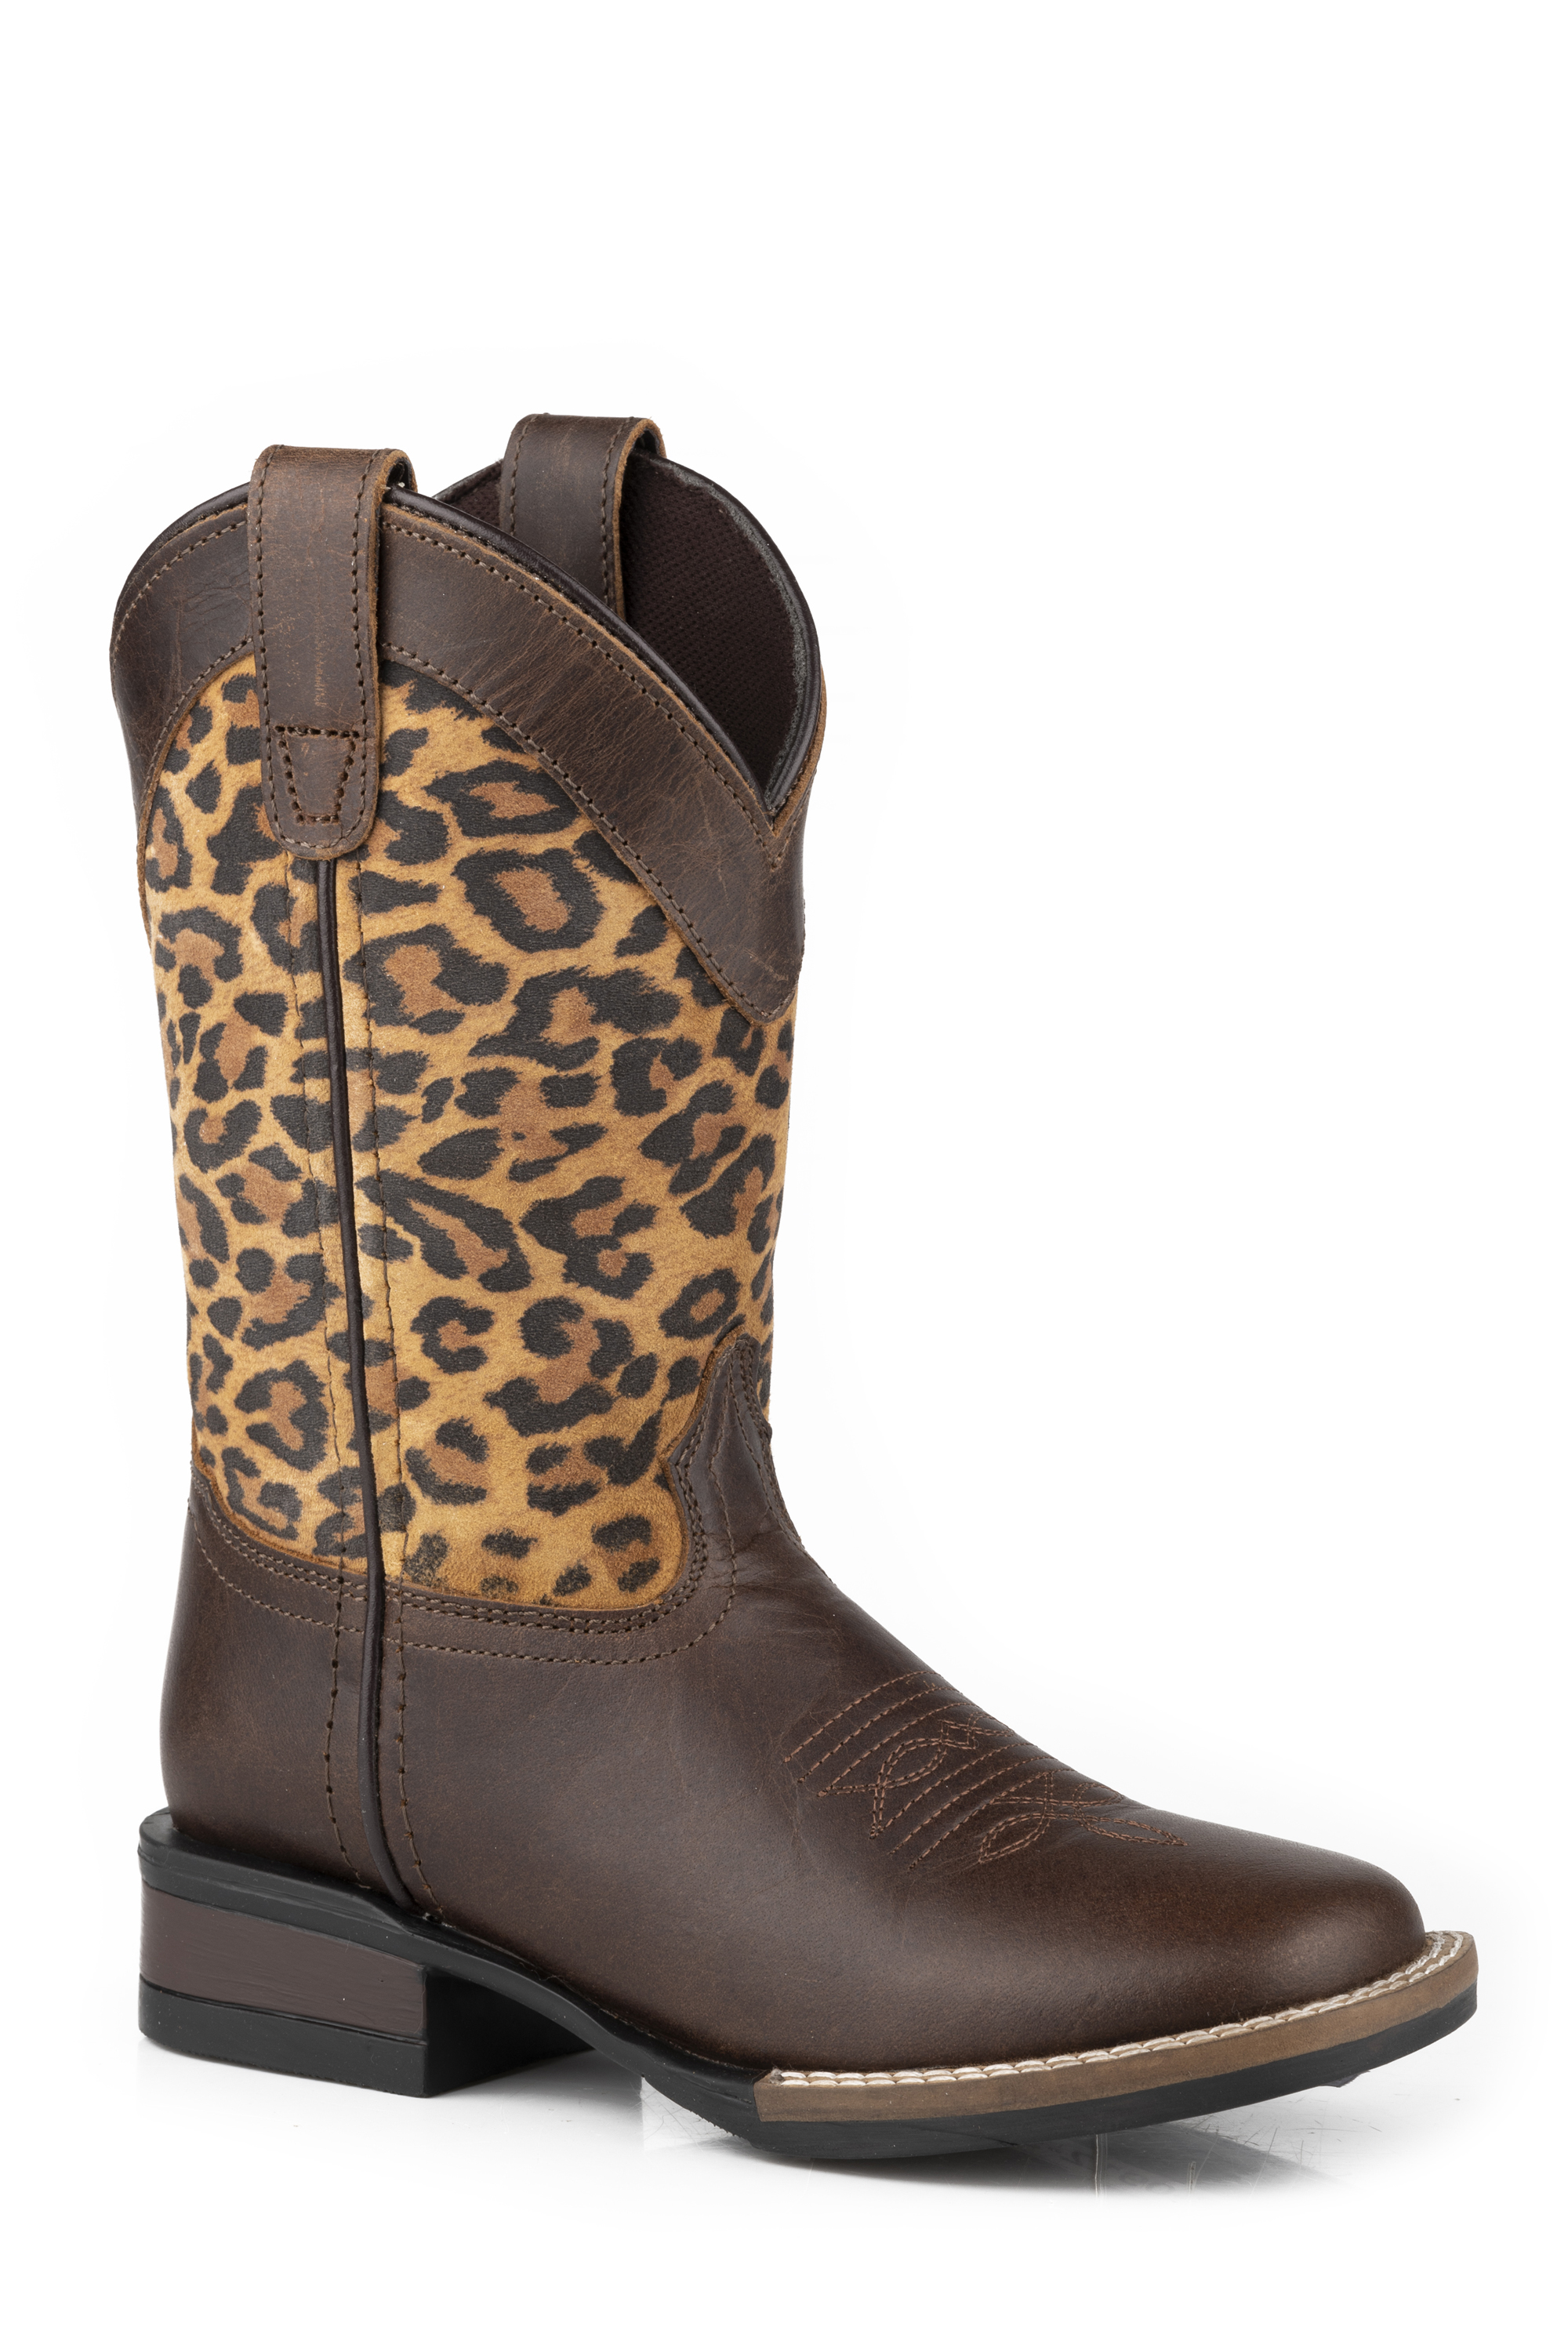 Roper Girls Leopard Boot